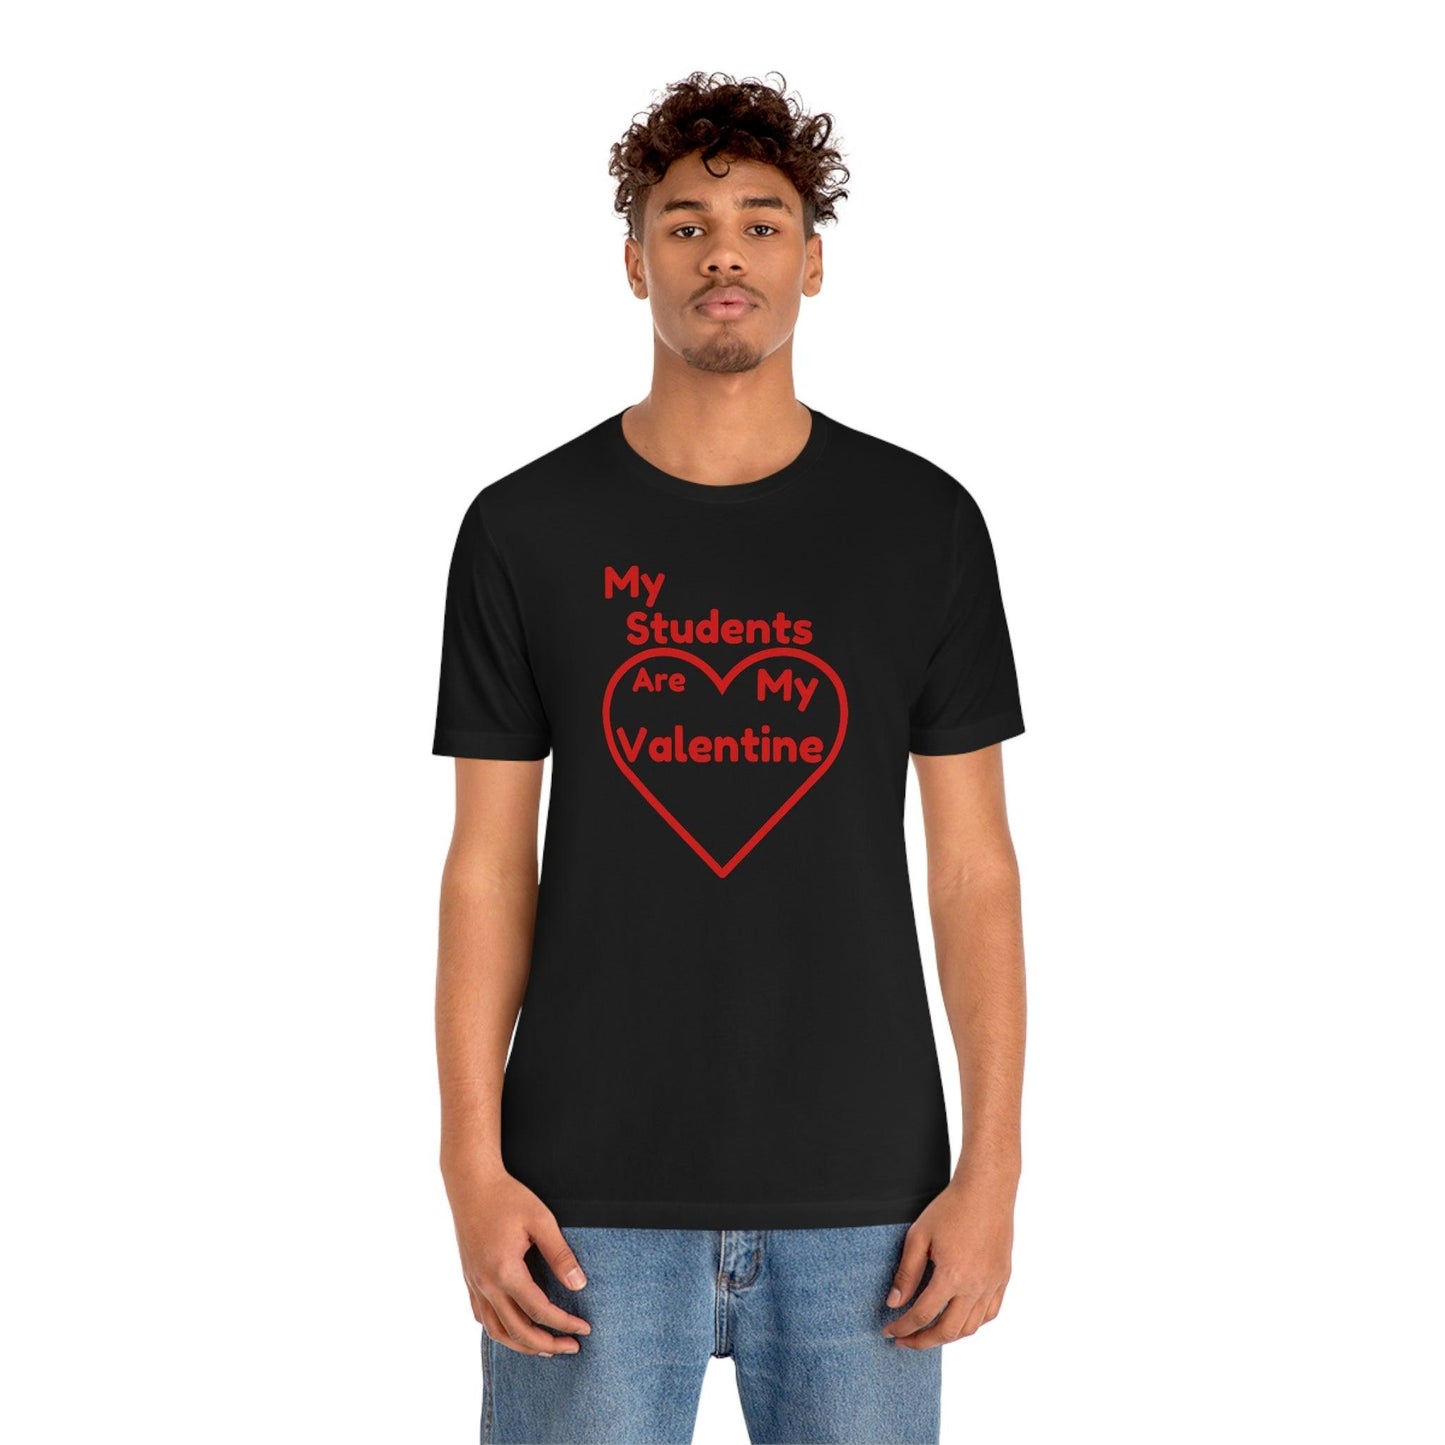 My Students are My Valentine - Teacher Valentine shirt